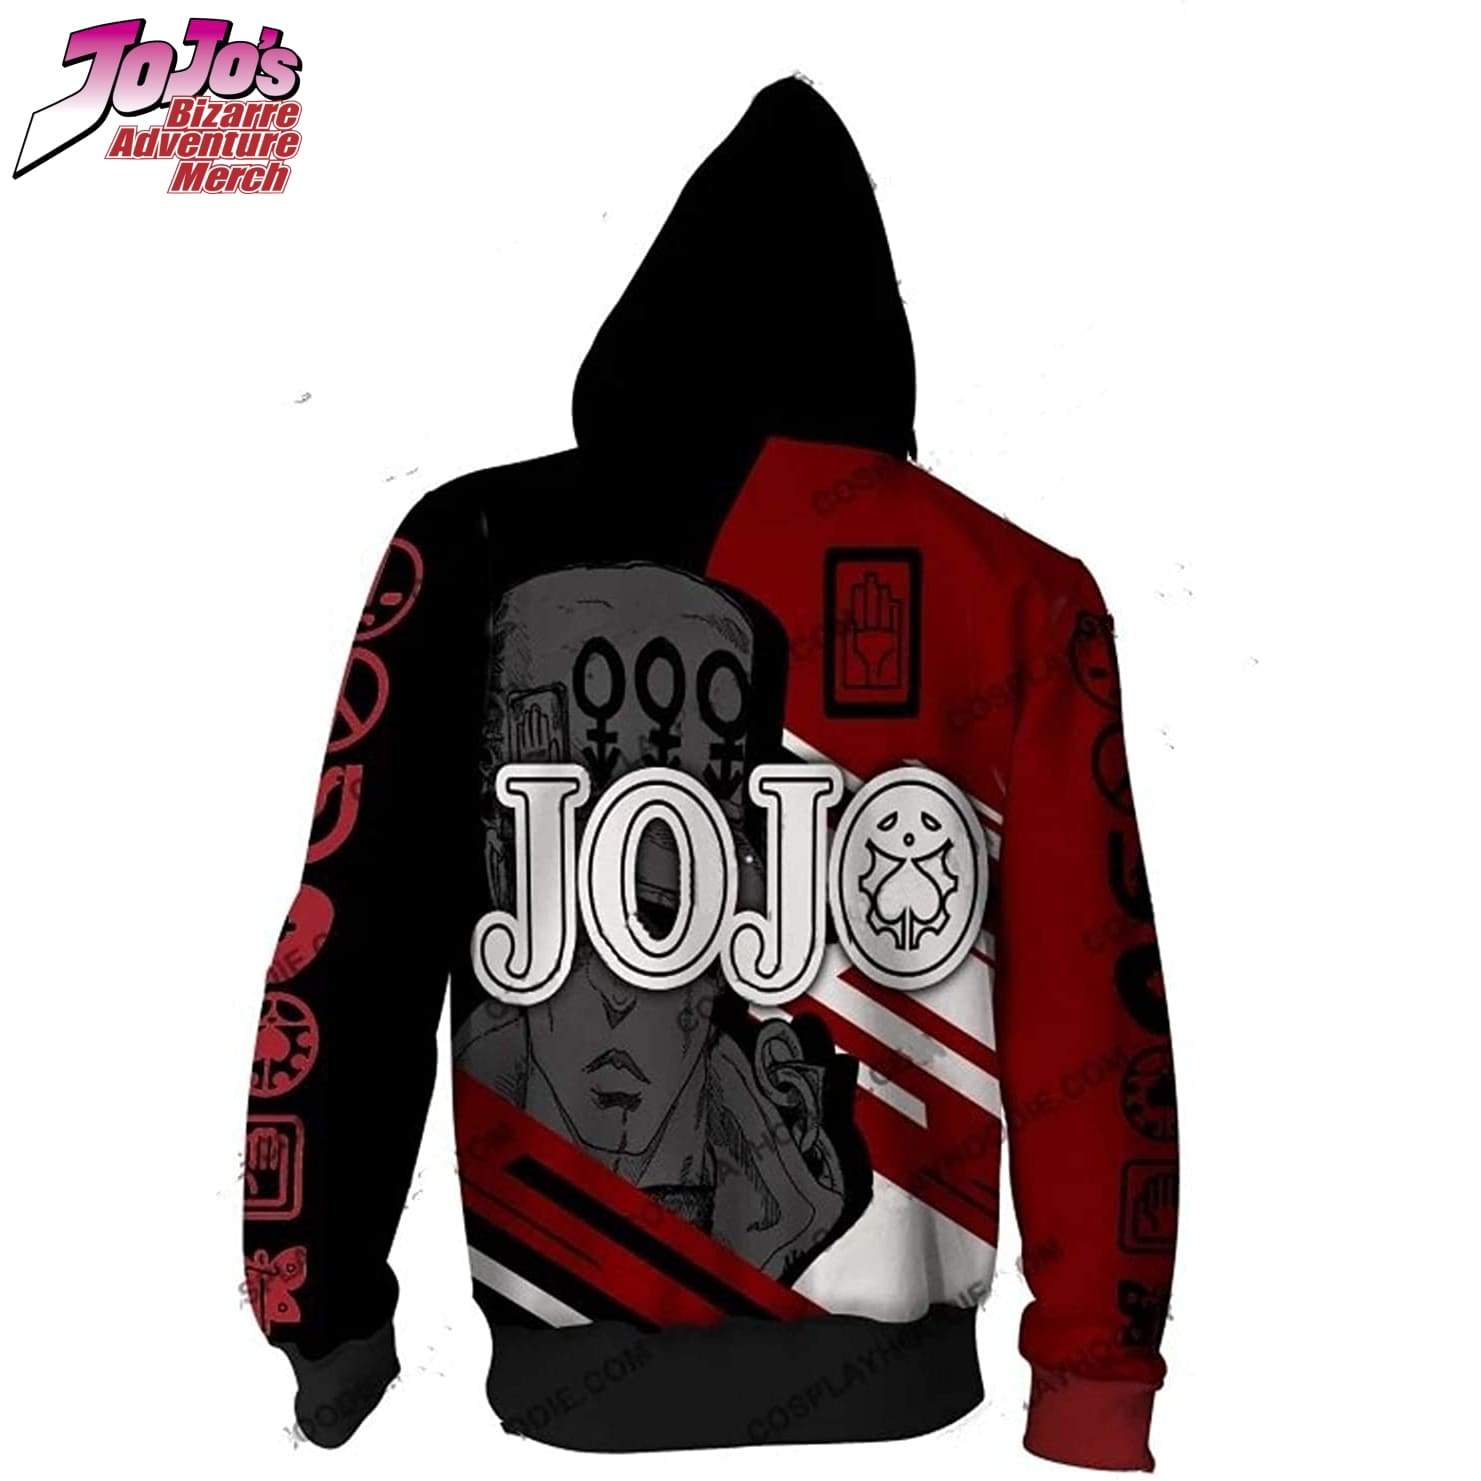 jjba zip up hoodie jojos bizarre adventure merch 716 ✅ JJBA Shop